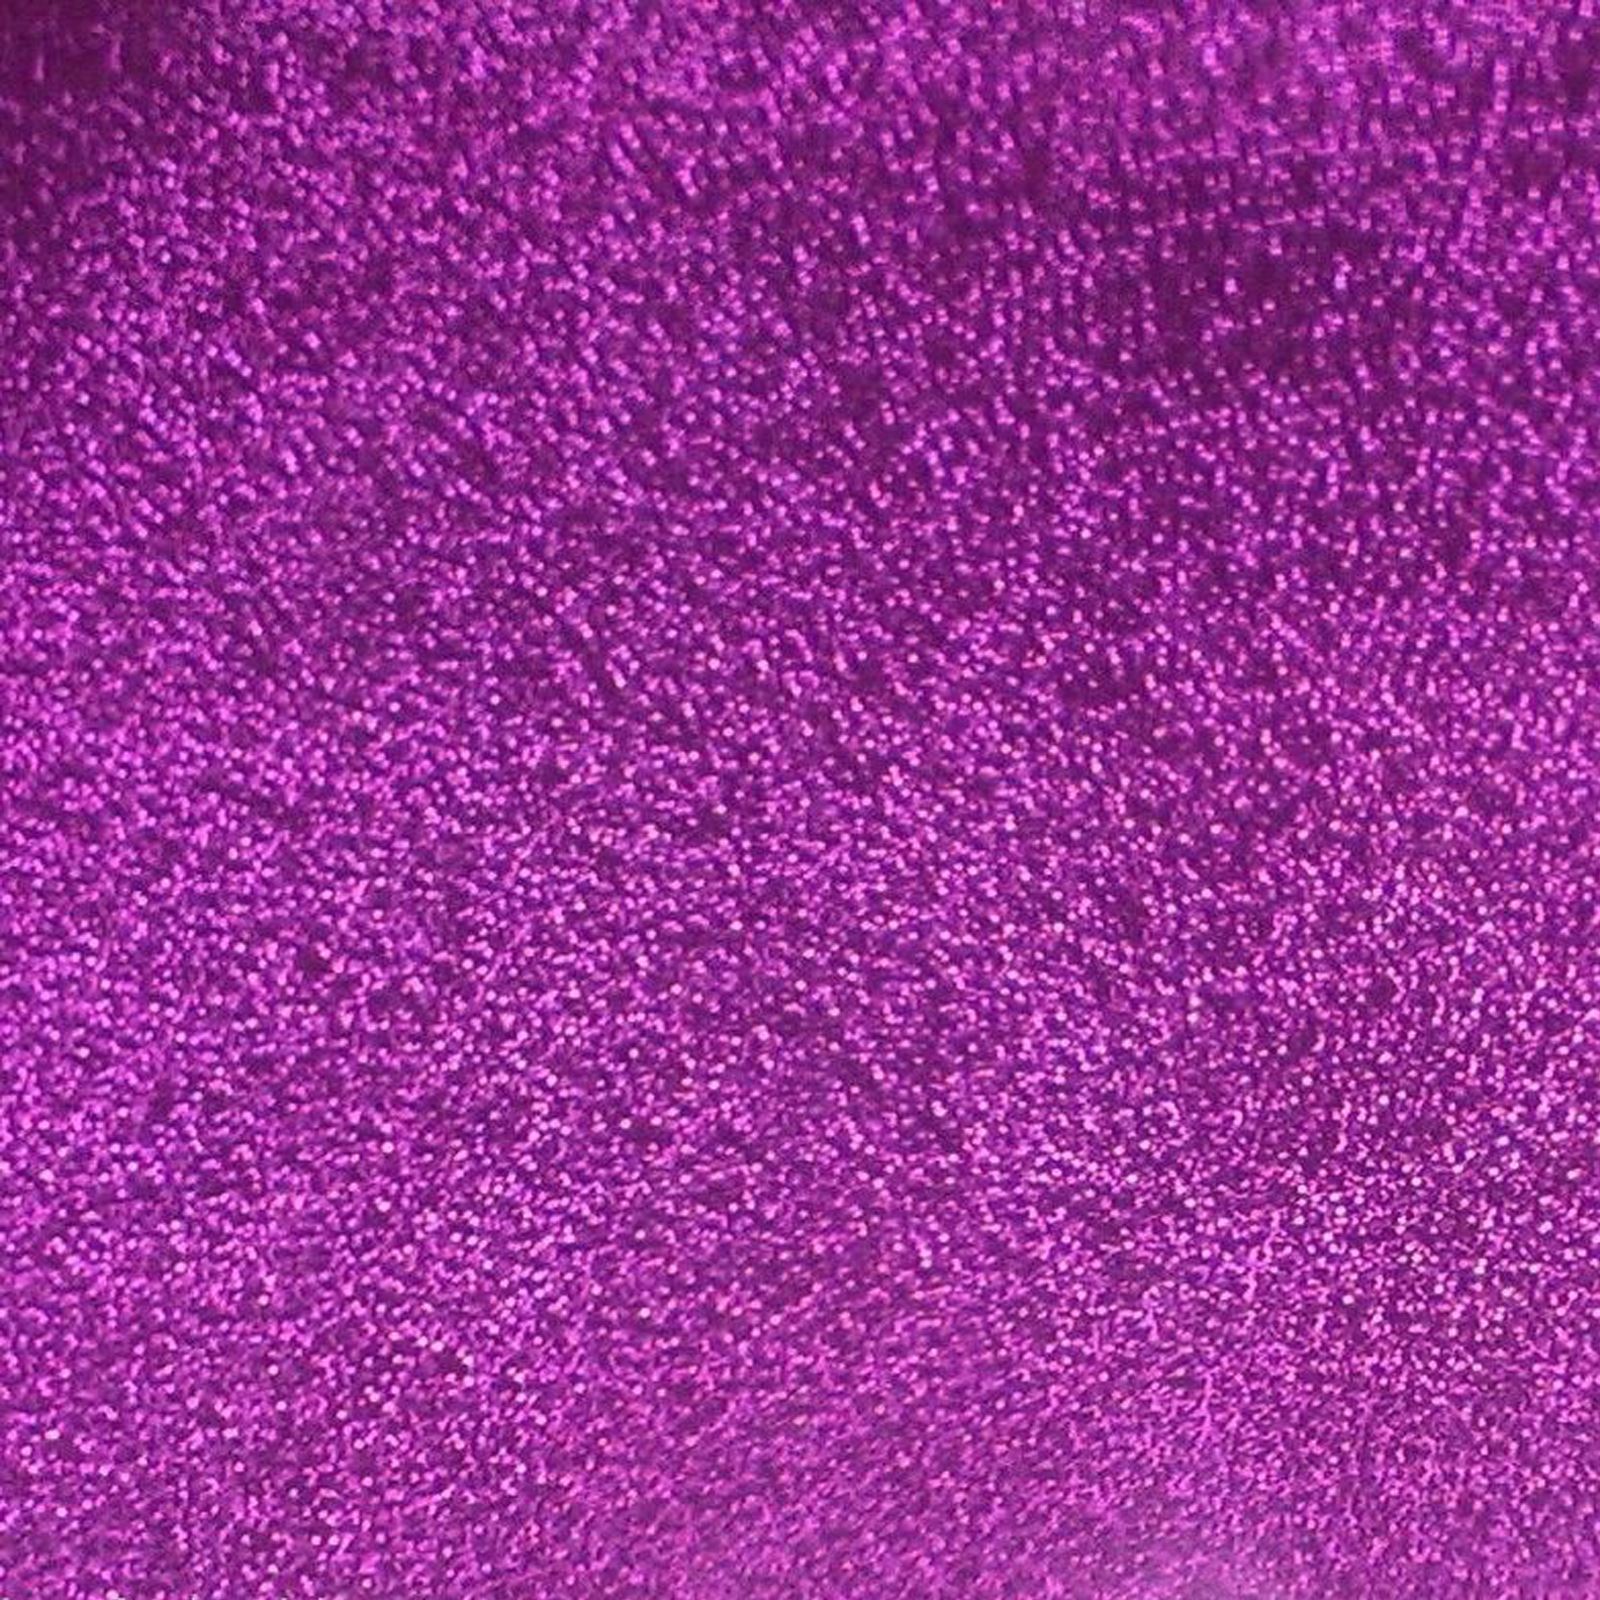 Very Holographic Glitter Wallpaper Rolls - Glitter Tapete Pink - HD Wallpaper 